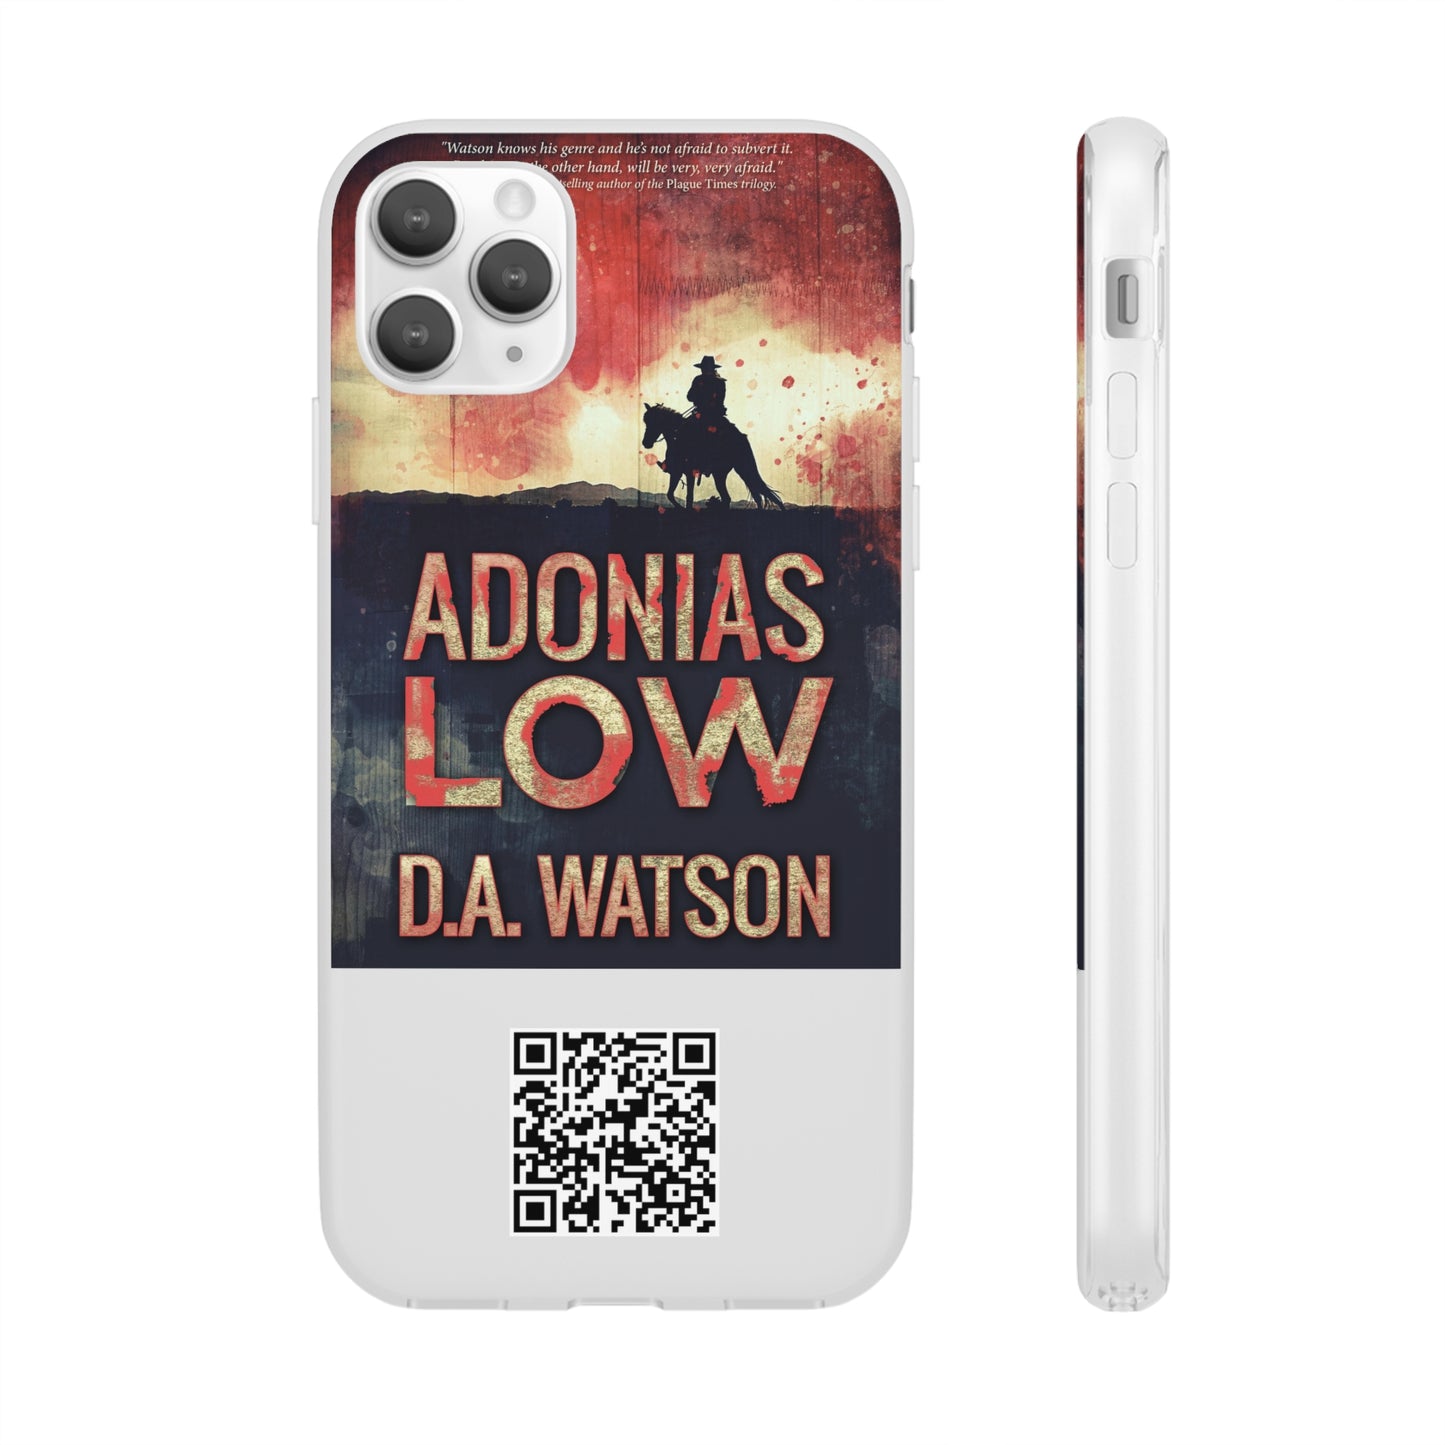 Adonias Low - Flexible Phone Case